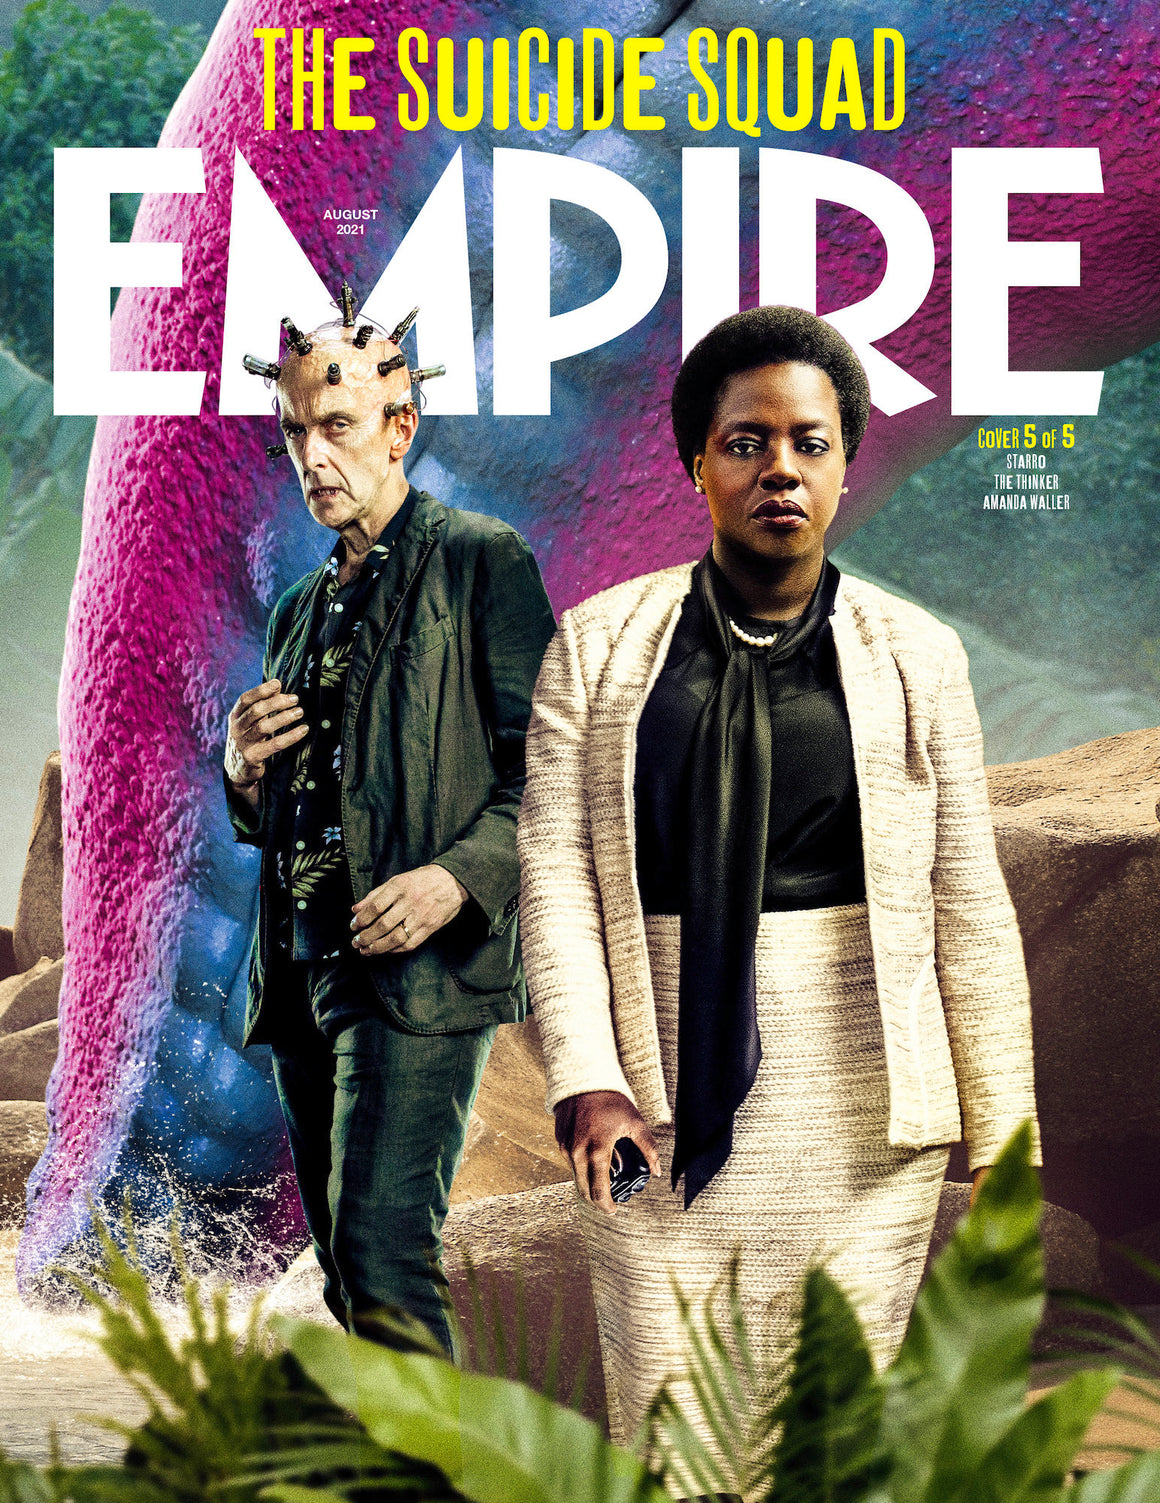 Empire Magazine August 2021: THE SUICIDE SQUAD - COVER #5 THINKER & STARRO